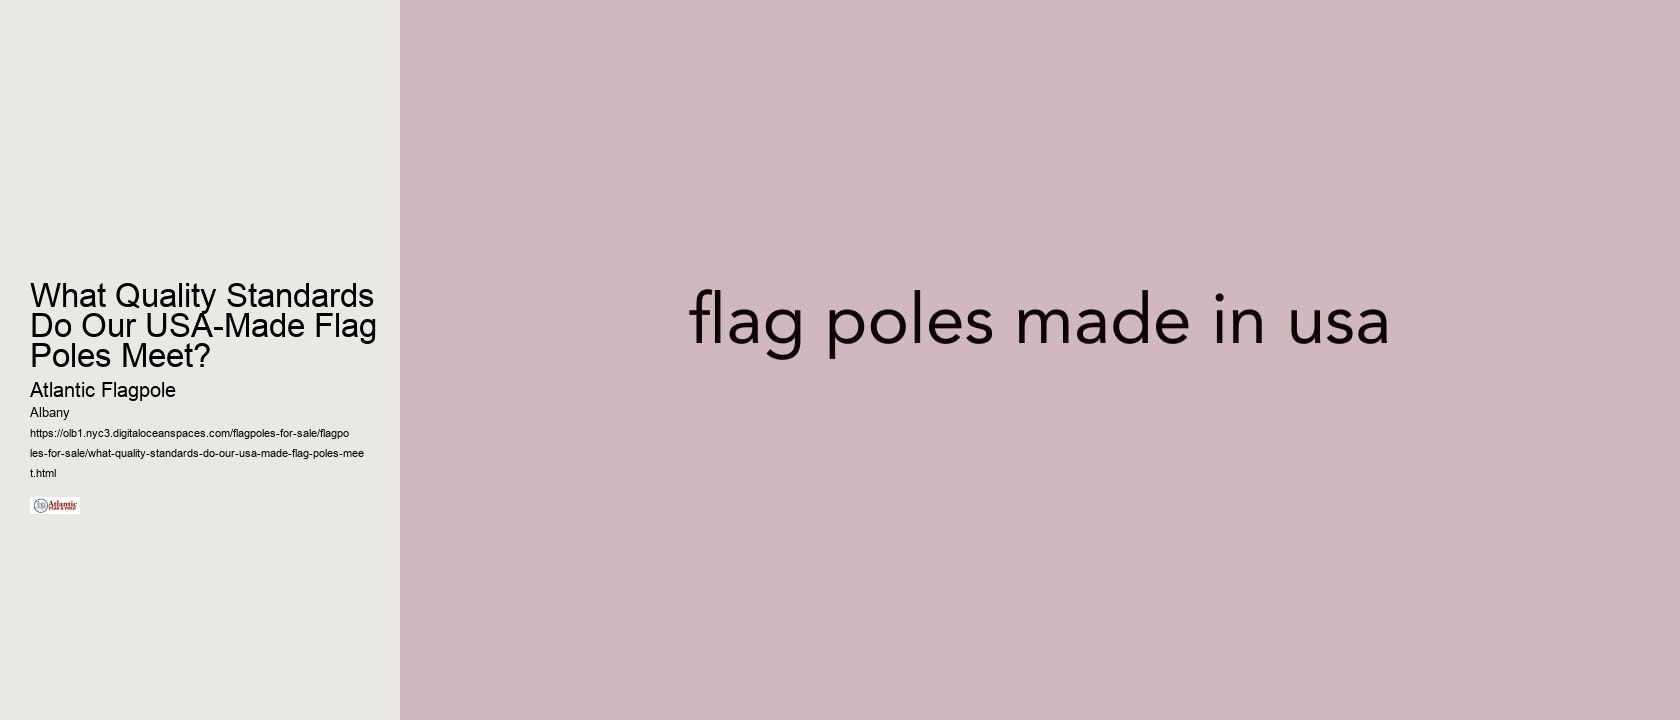 What Quality Standards Do Our USA-Made Flag Poles Meet?